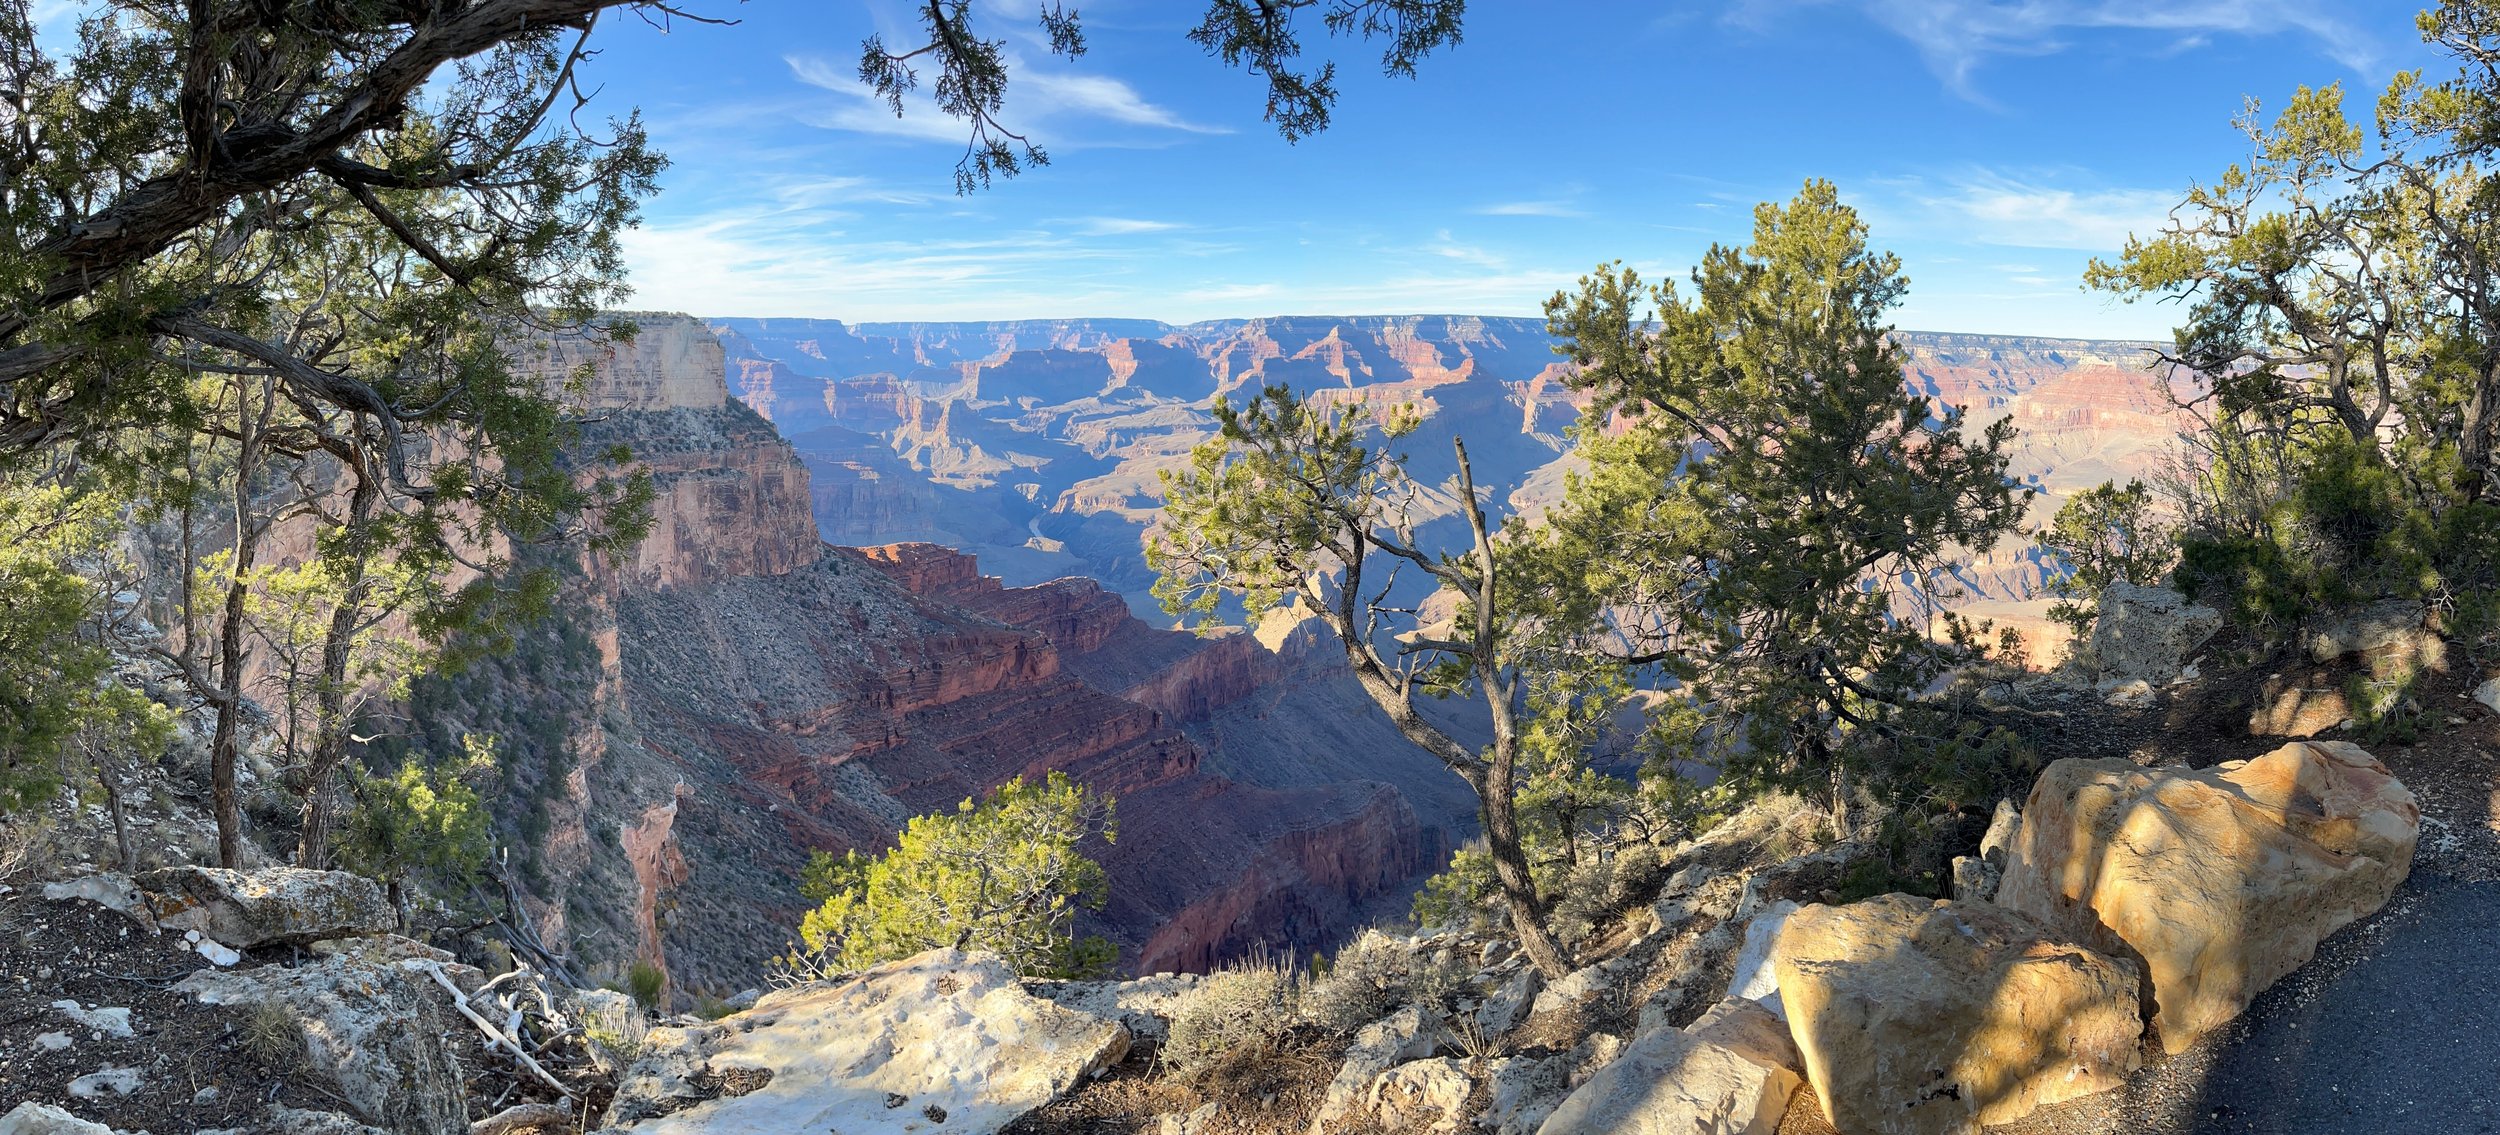 Grand Canyon_II_Tina.jpg